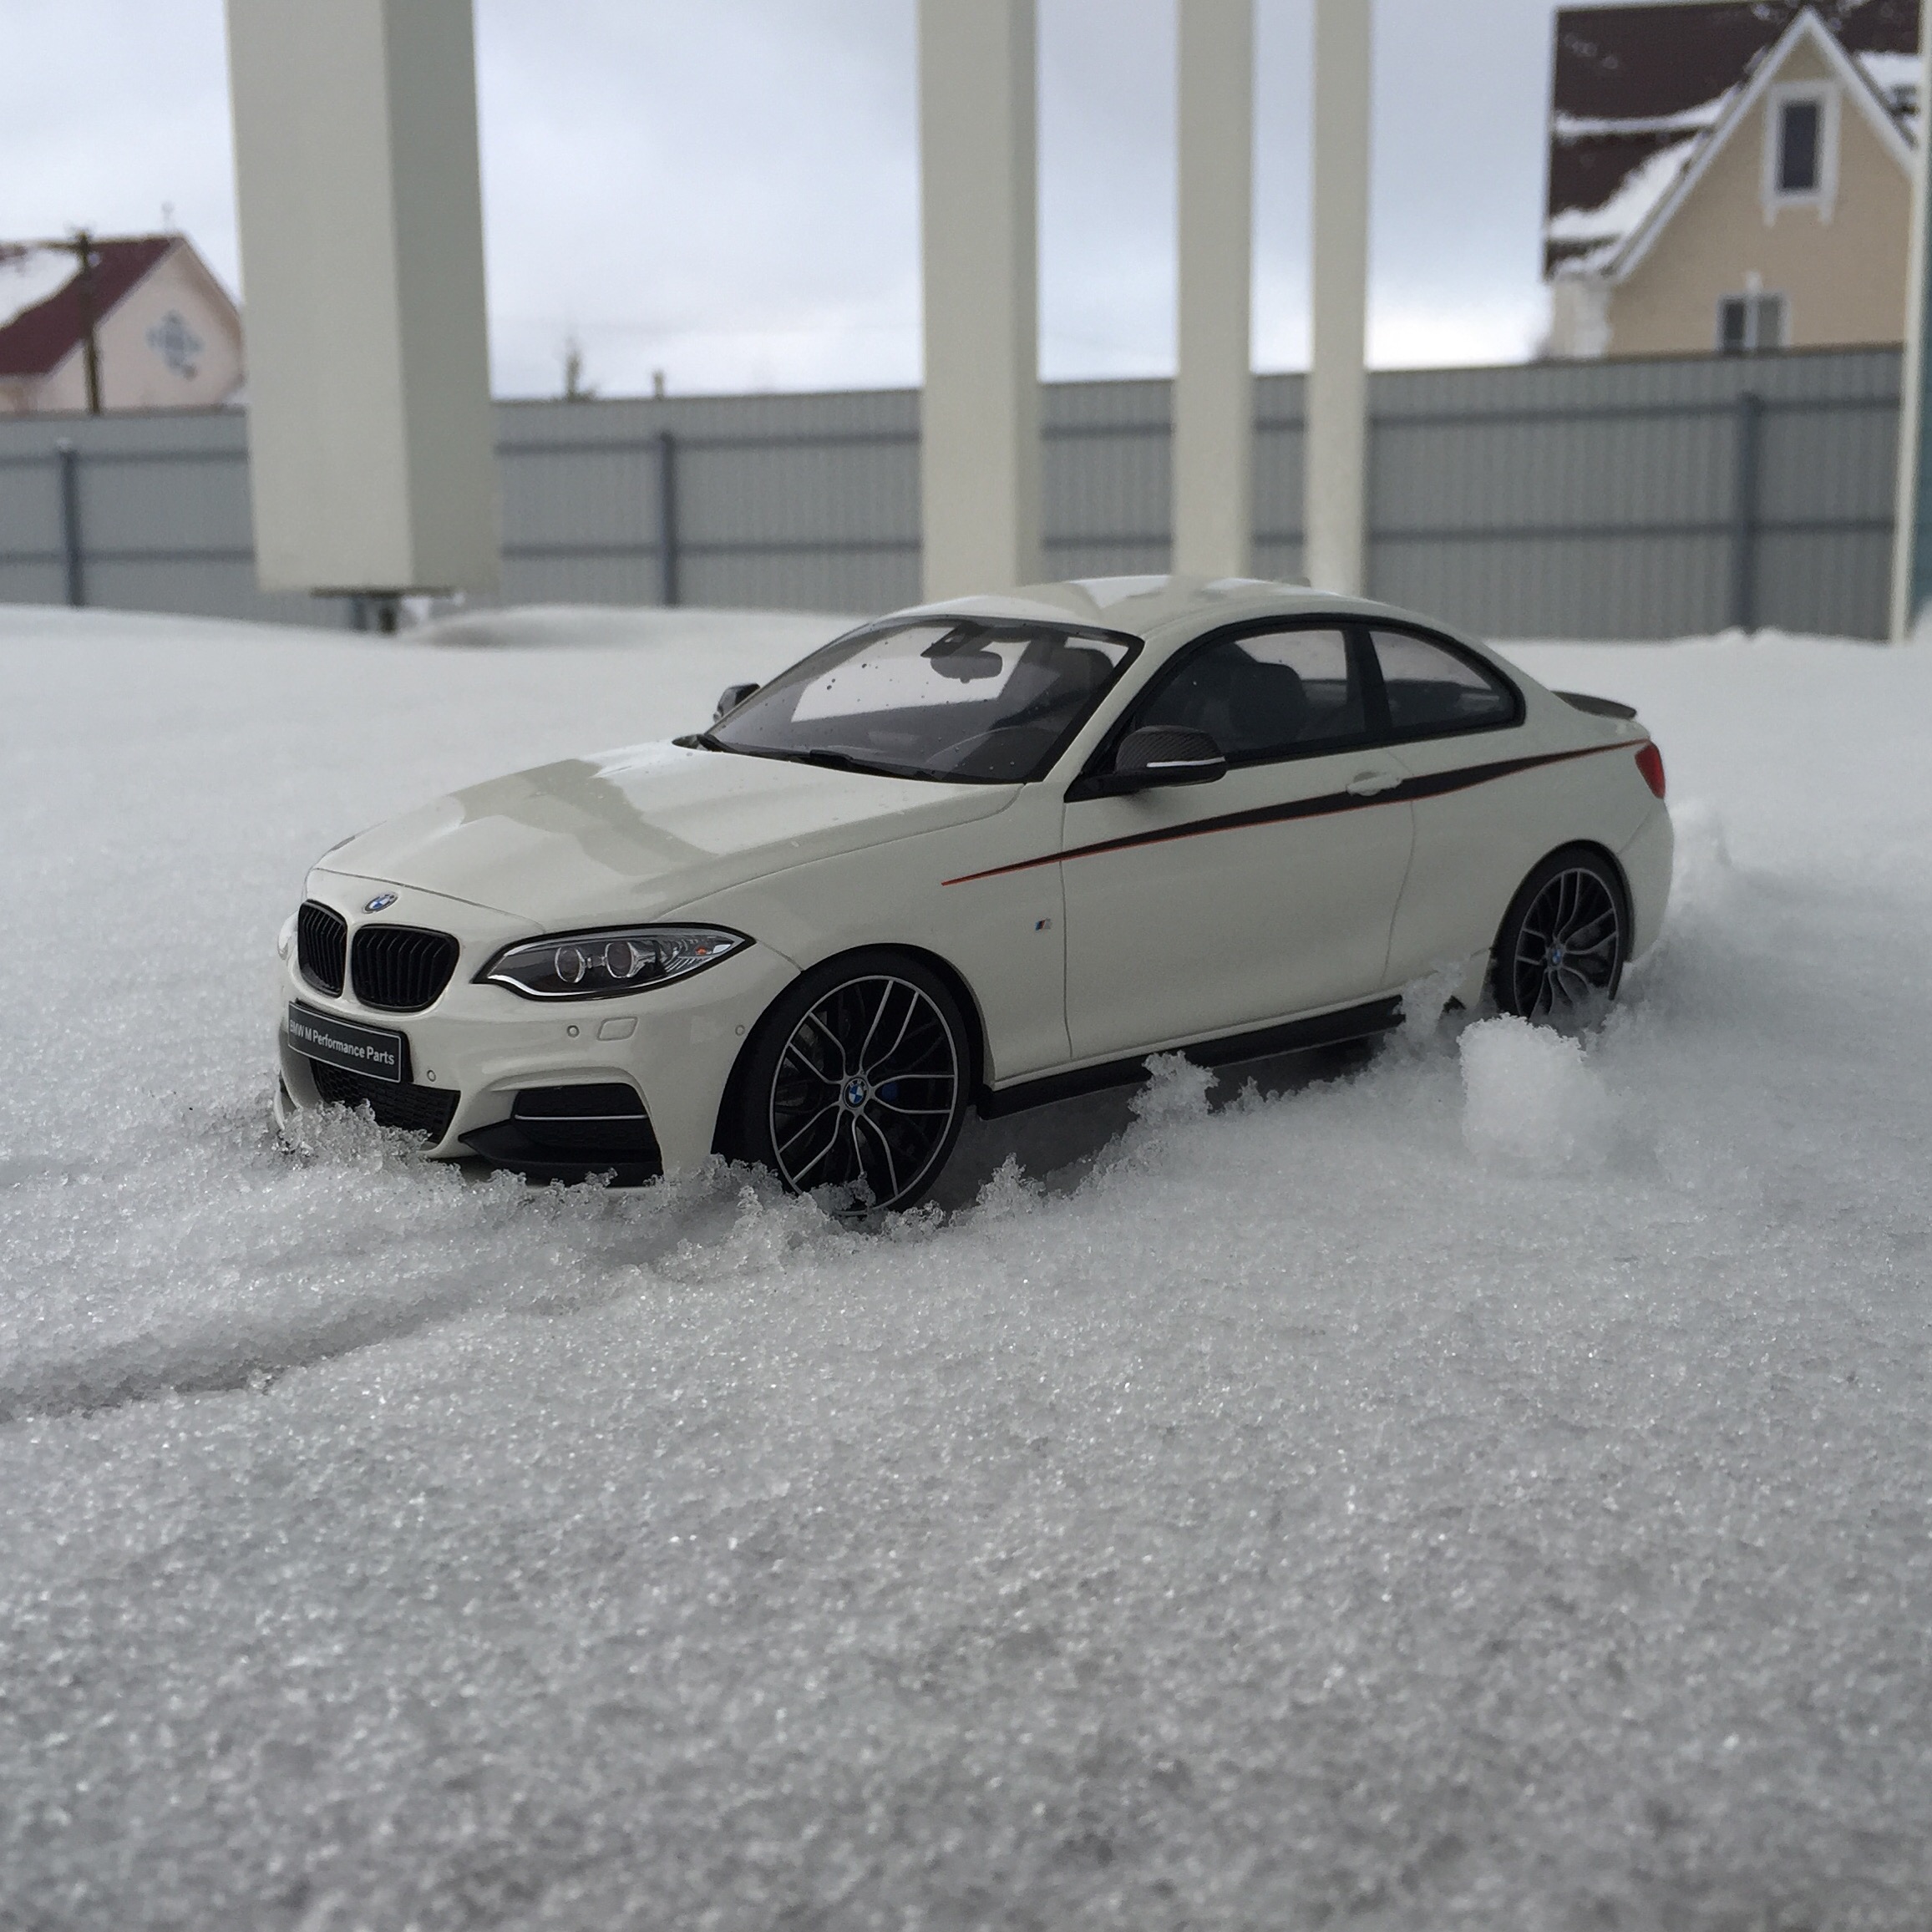 BMW M235i (F22) M Perfomance, alpine white, le 0664 of 1,000pcs. (gt spirit)